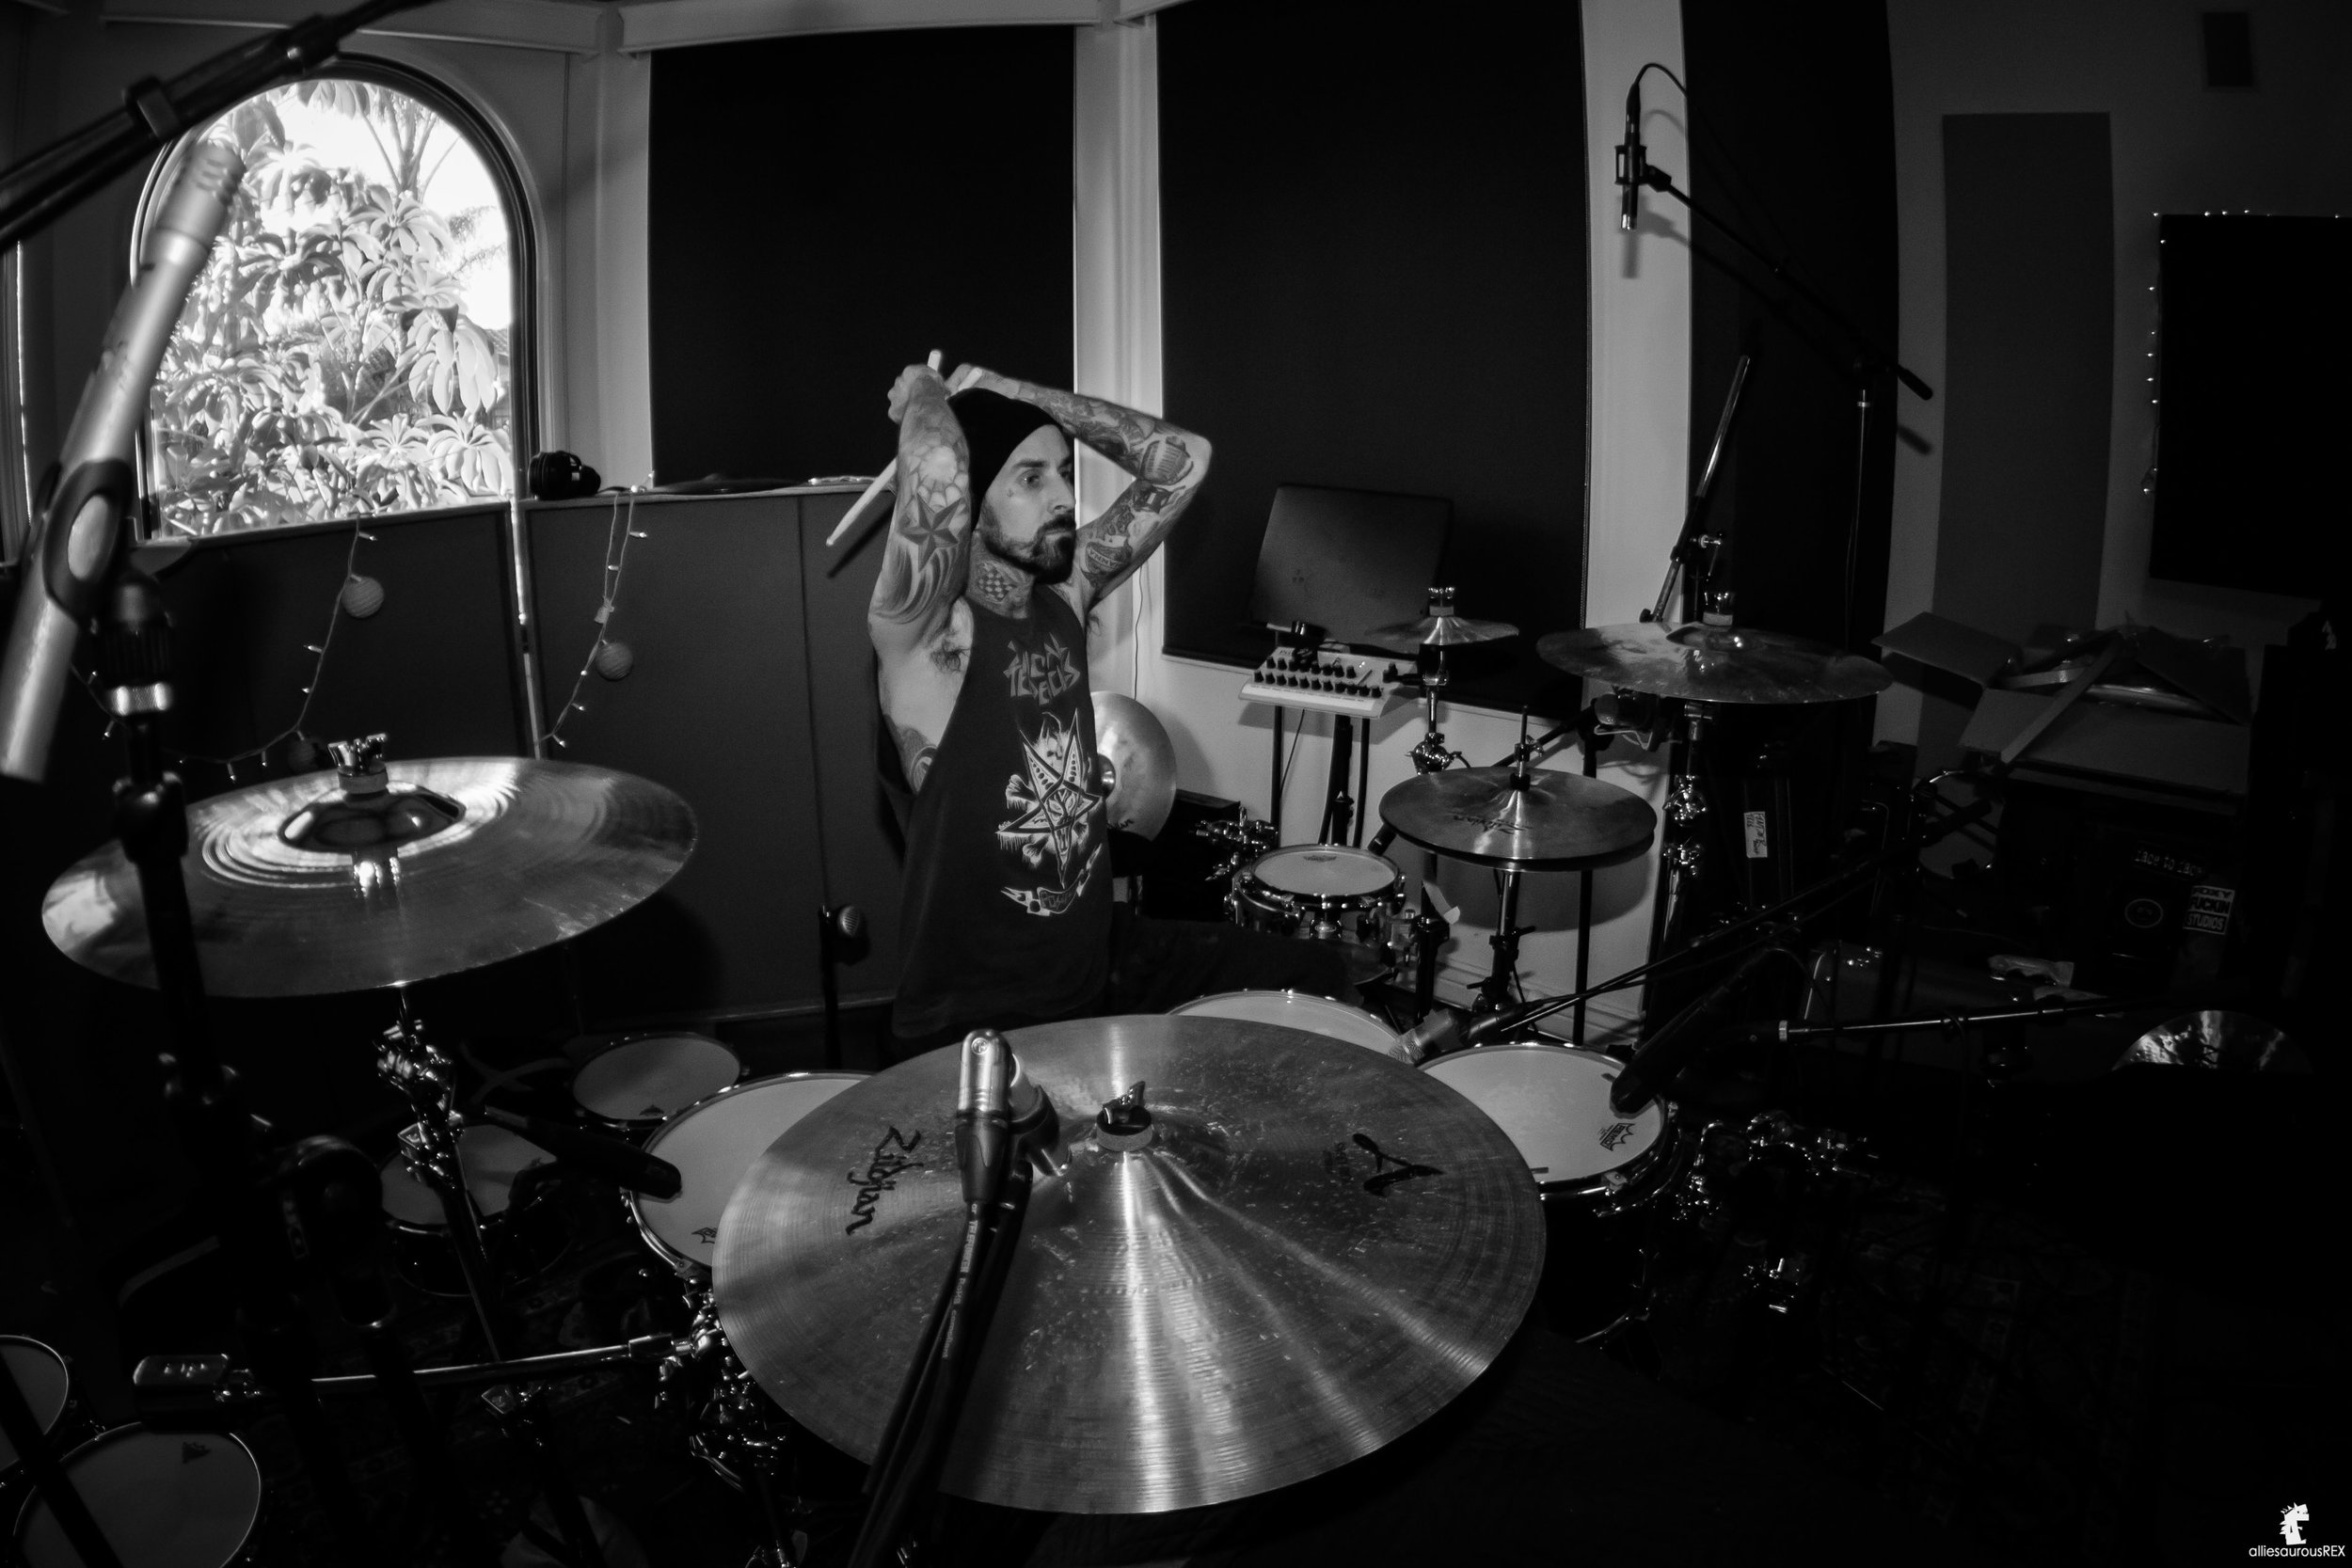  Travis Barker recording drums for Blink 182’s grammy nominated album “California” 